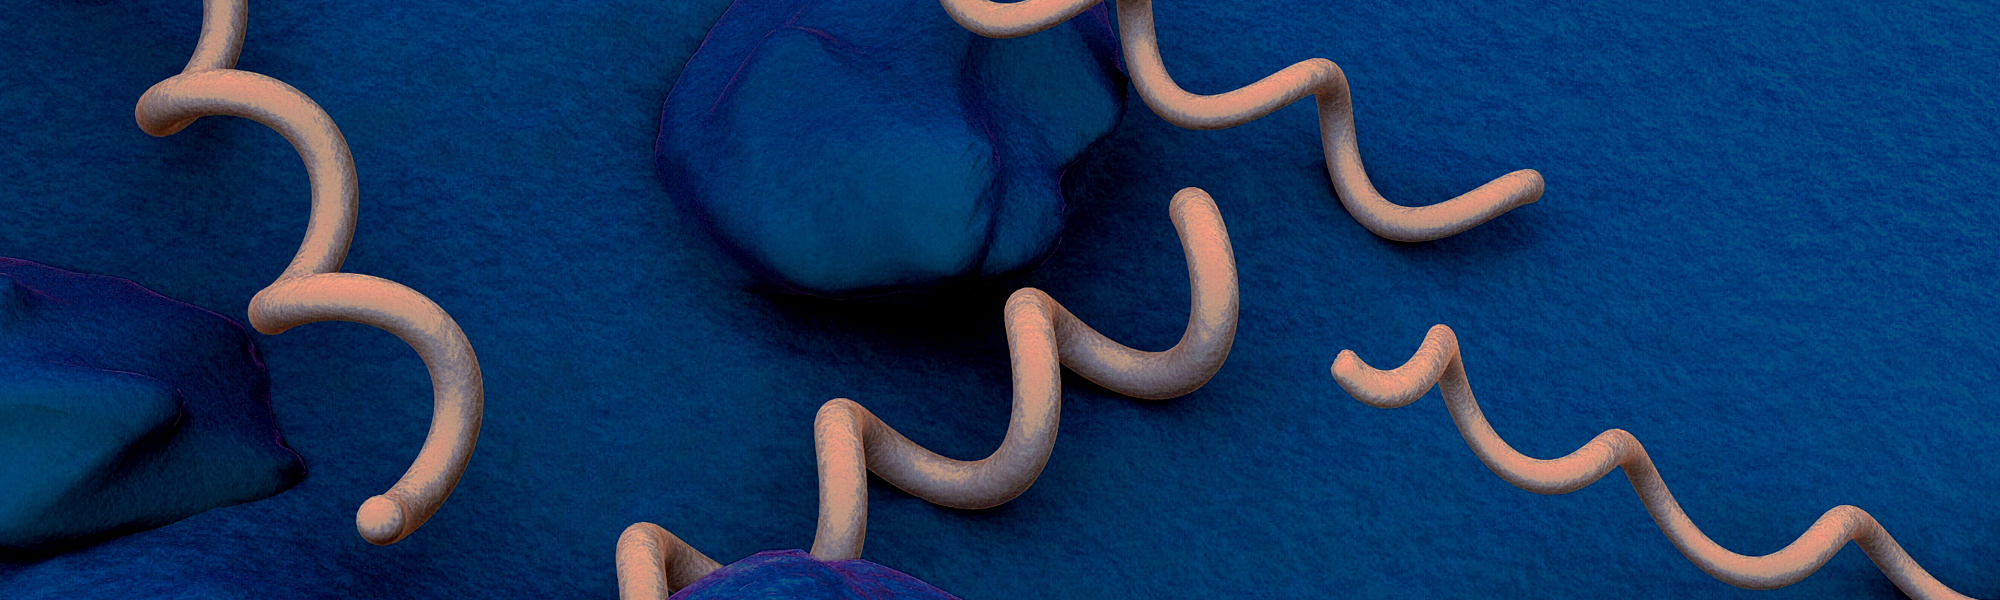 Representation for syphilis virus | Credits: CDC